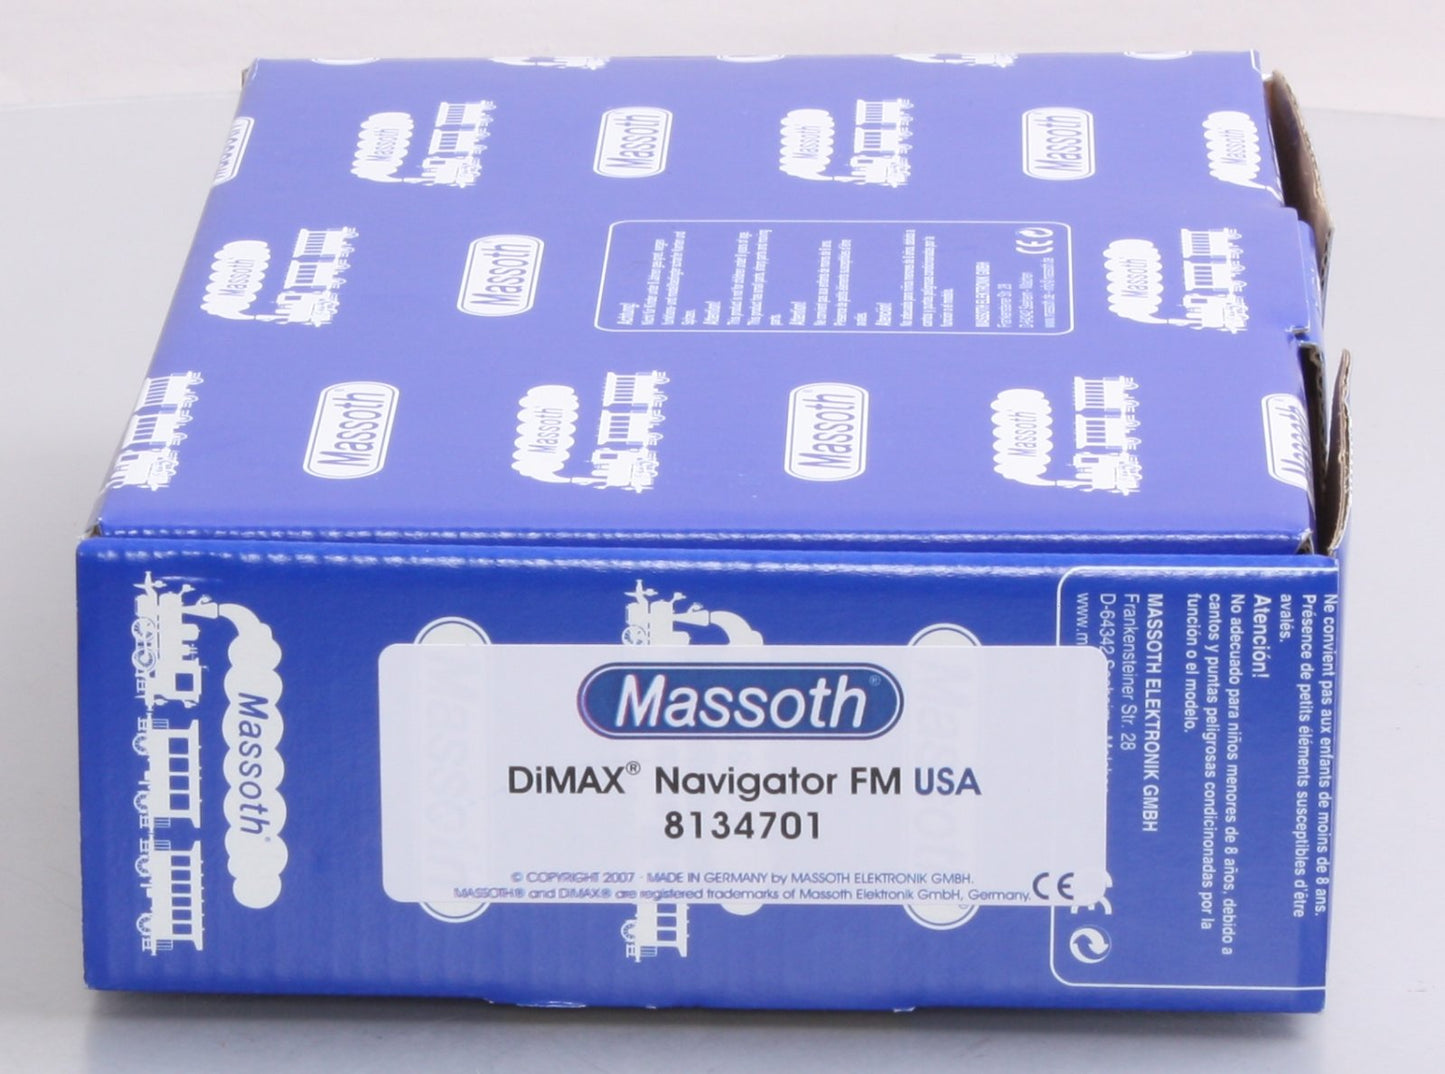 Massoth 8134701 DiMAX Navigator FM